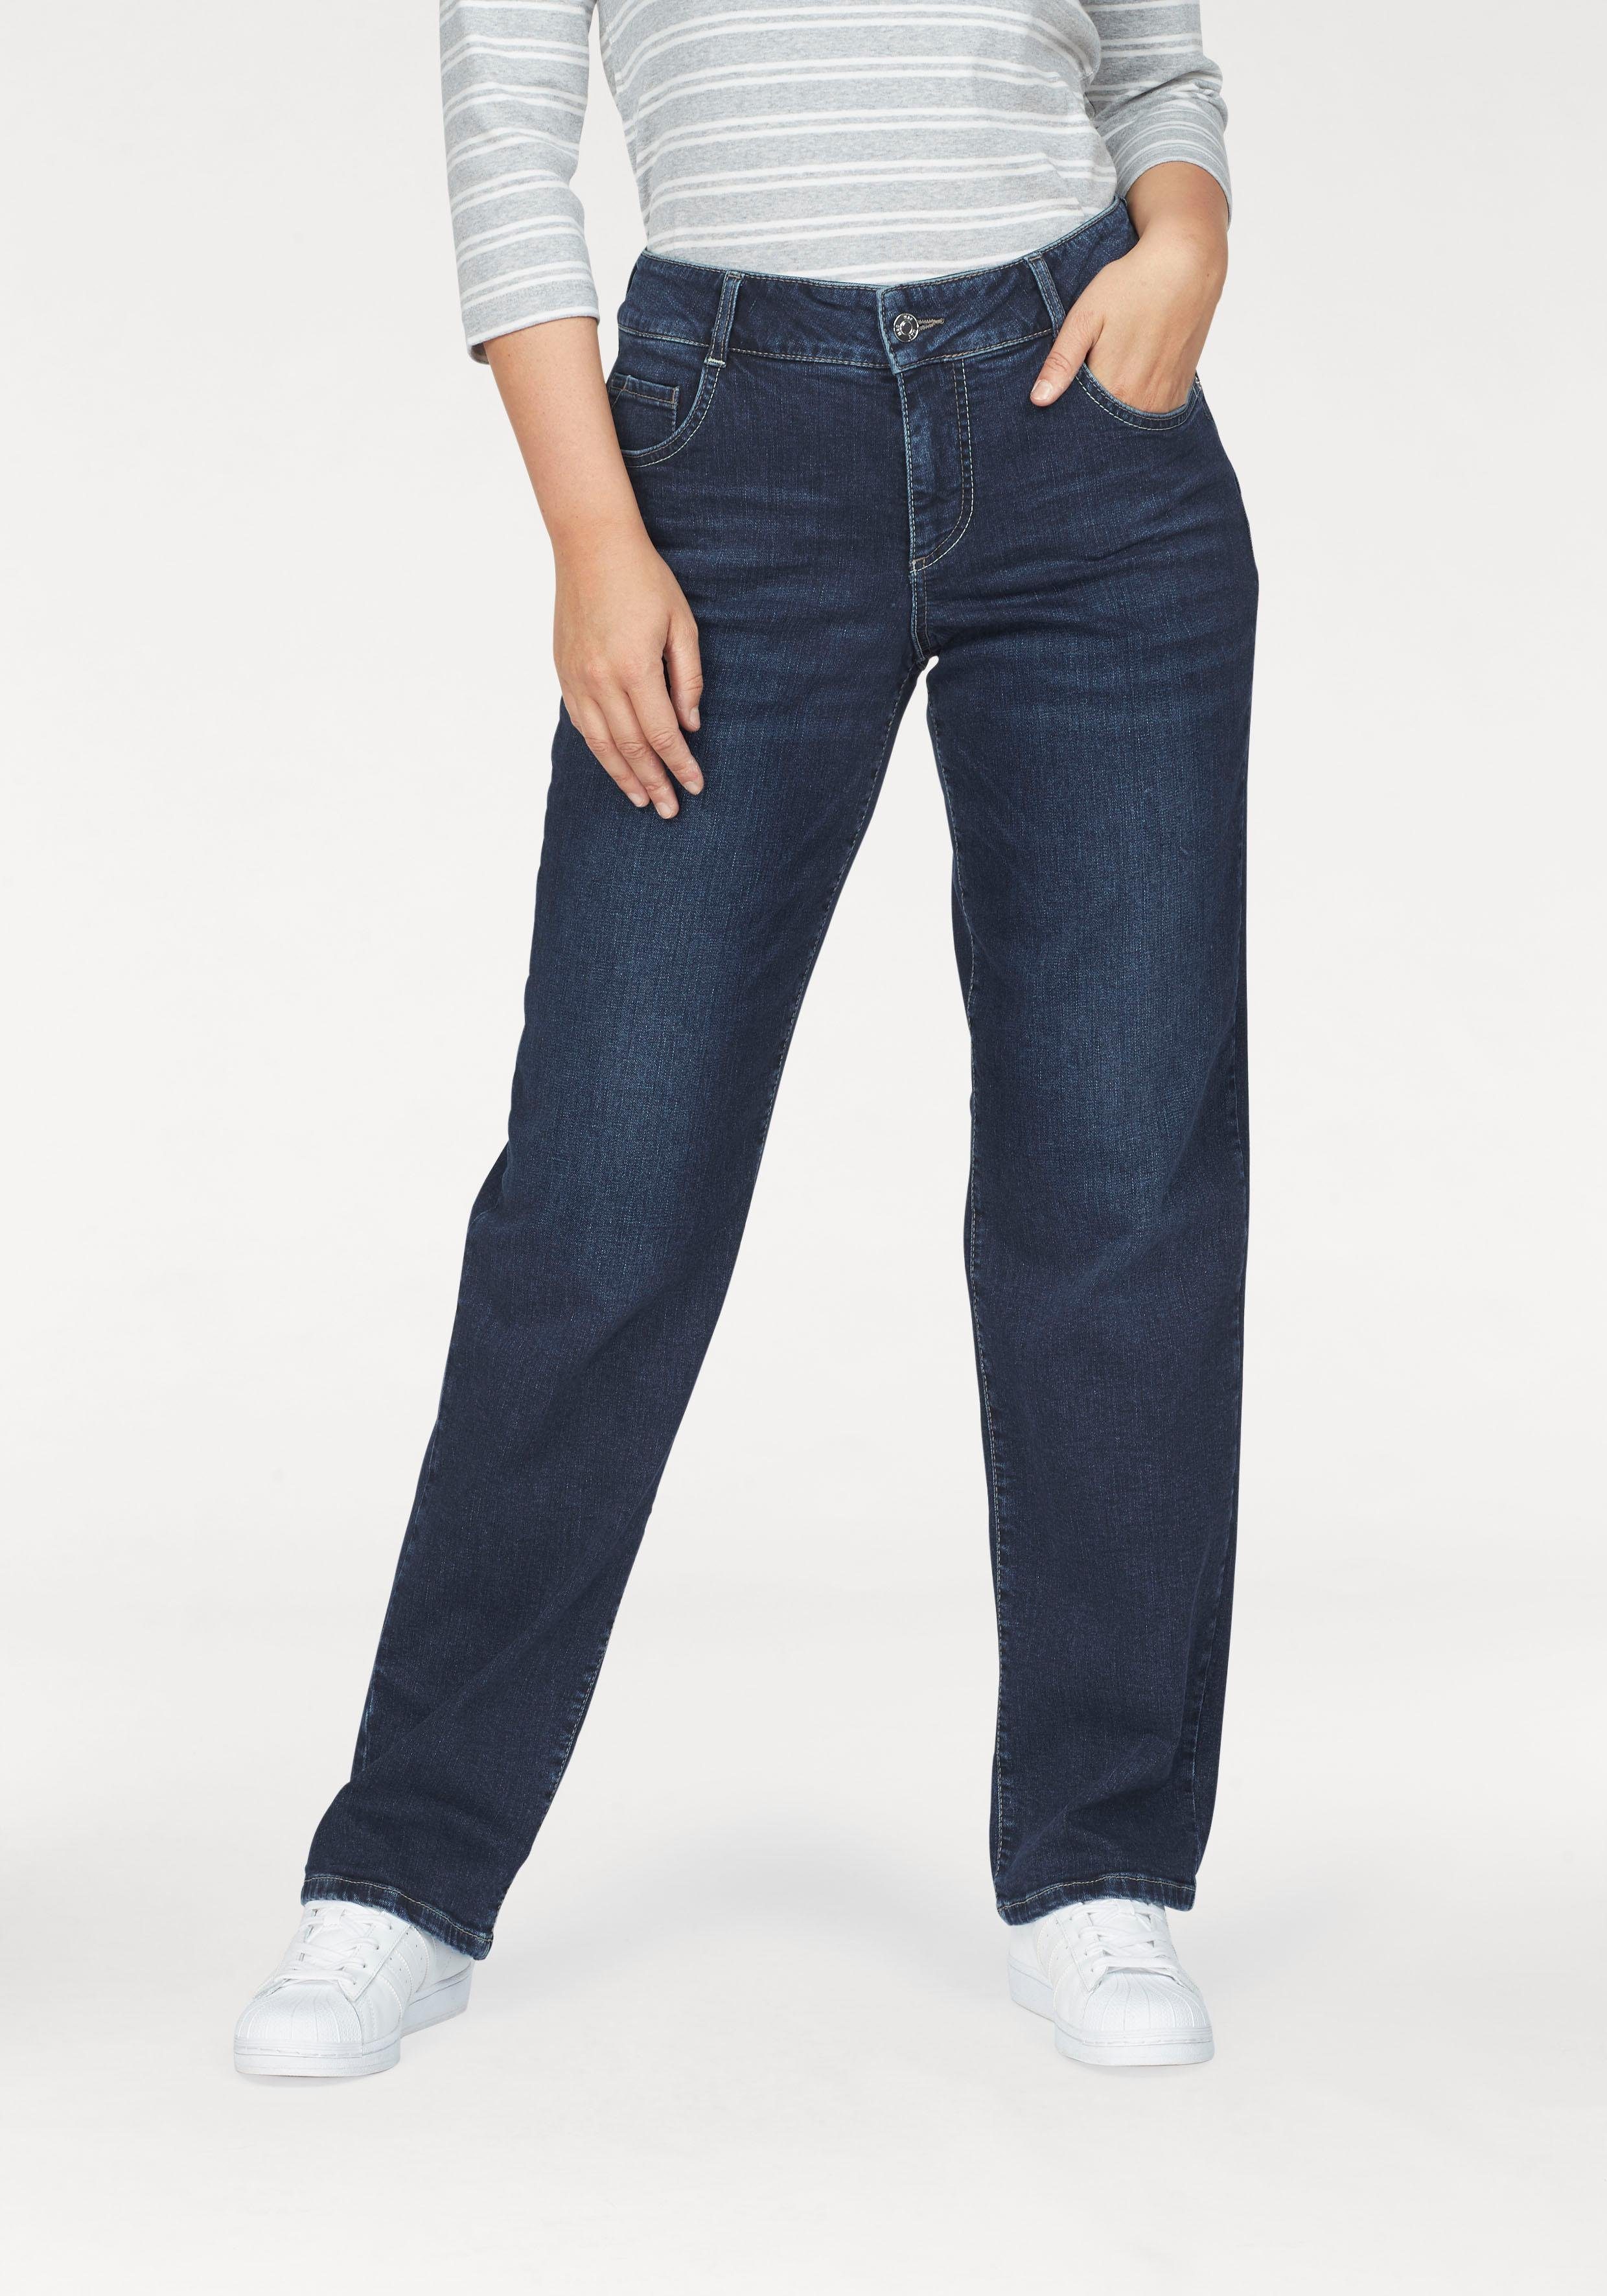 MAC Bequeme Jeans »Gracia« Passform feminine fit